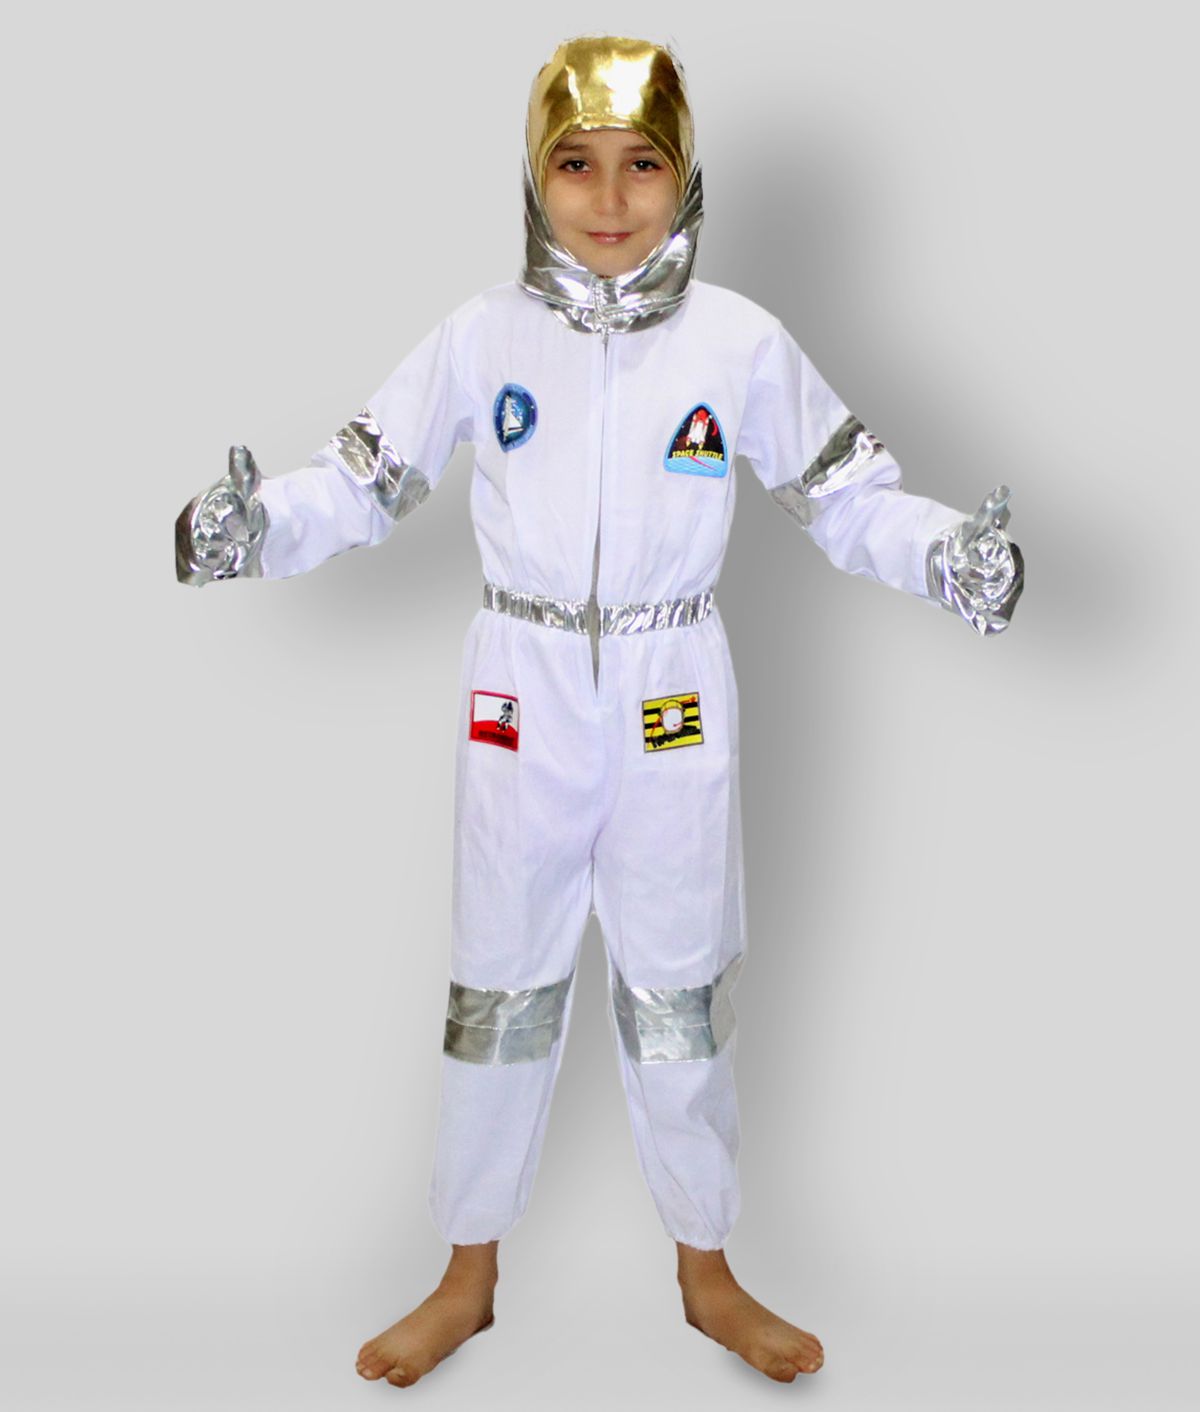     			Kaku Fancy Dresses Space Astronaut Cosplay Costume -White, 3-4 Years, for Boys & Girls